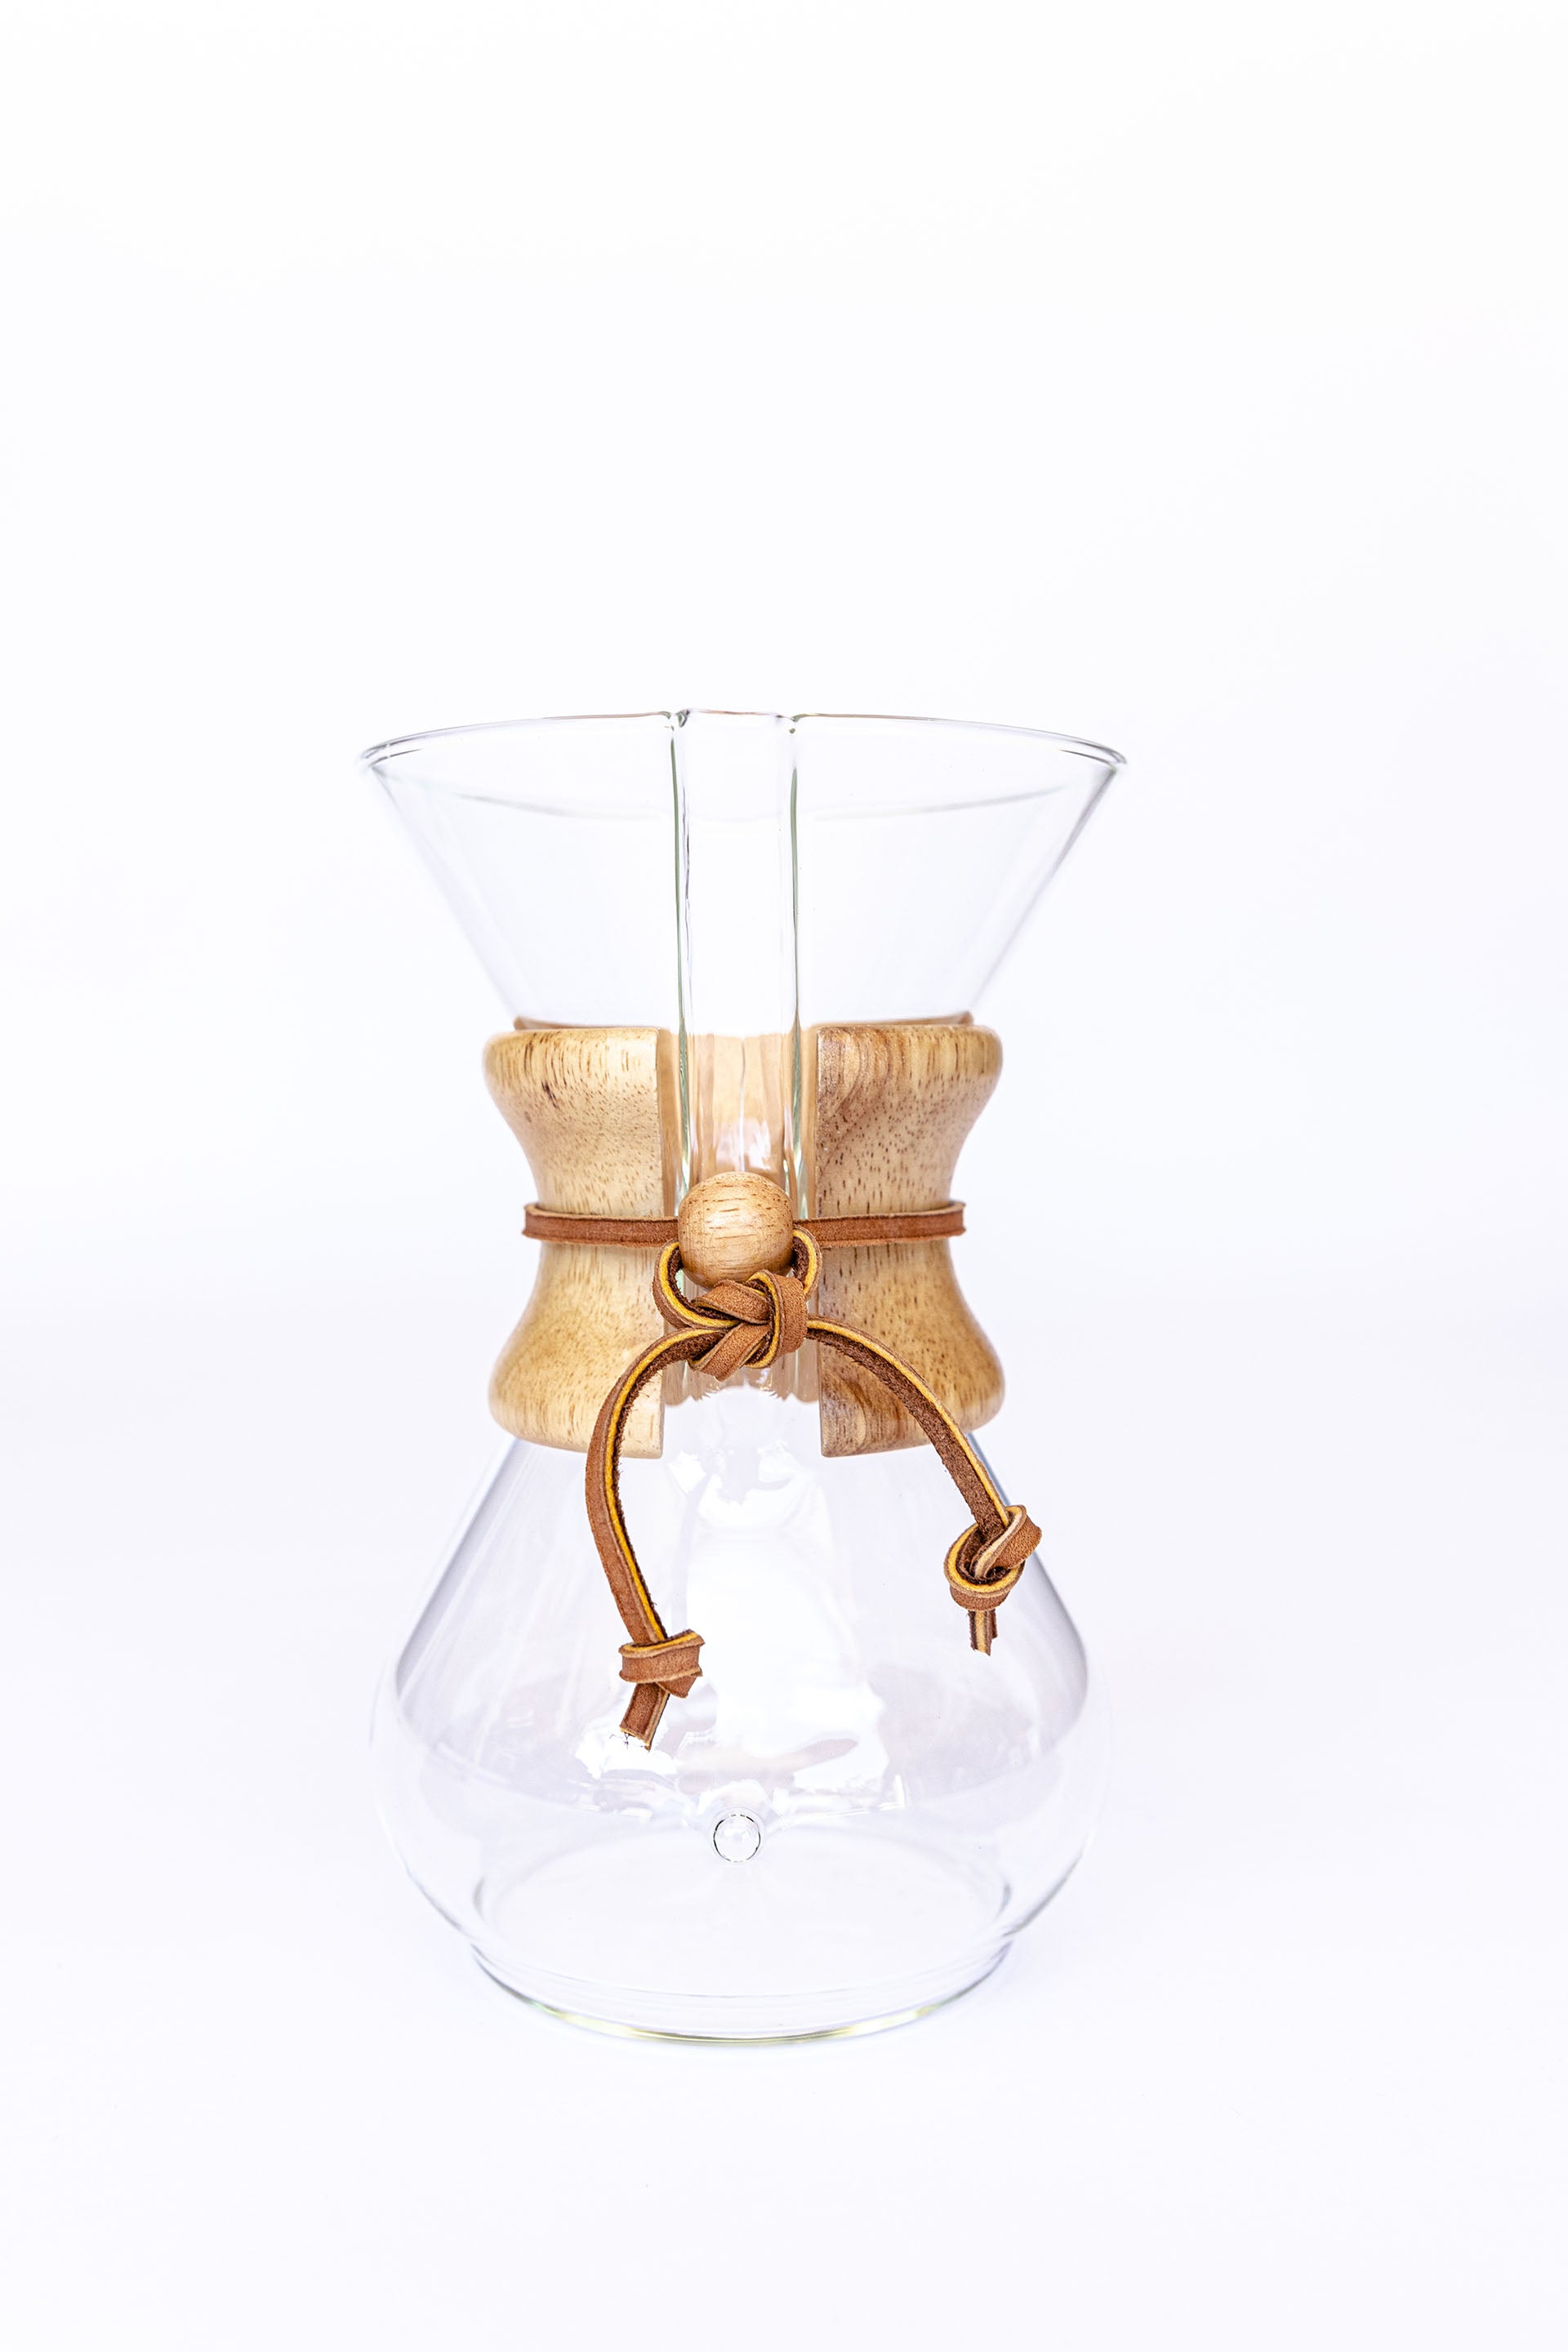 Chemex Coffee Maker- Glass Handle - 3 Cup / 15oz.